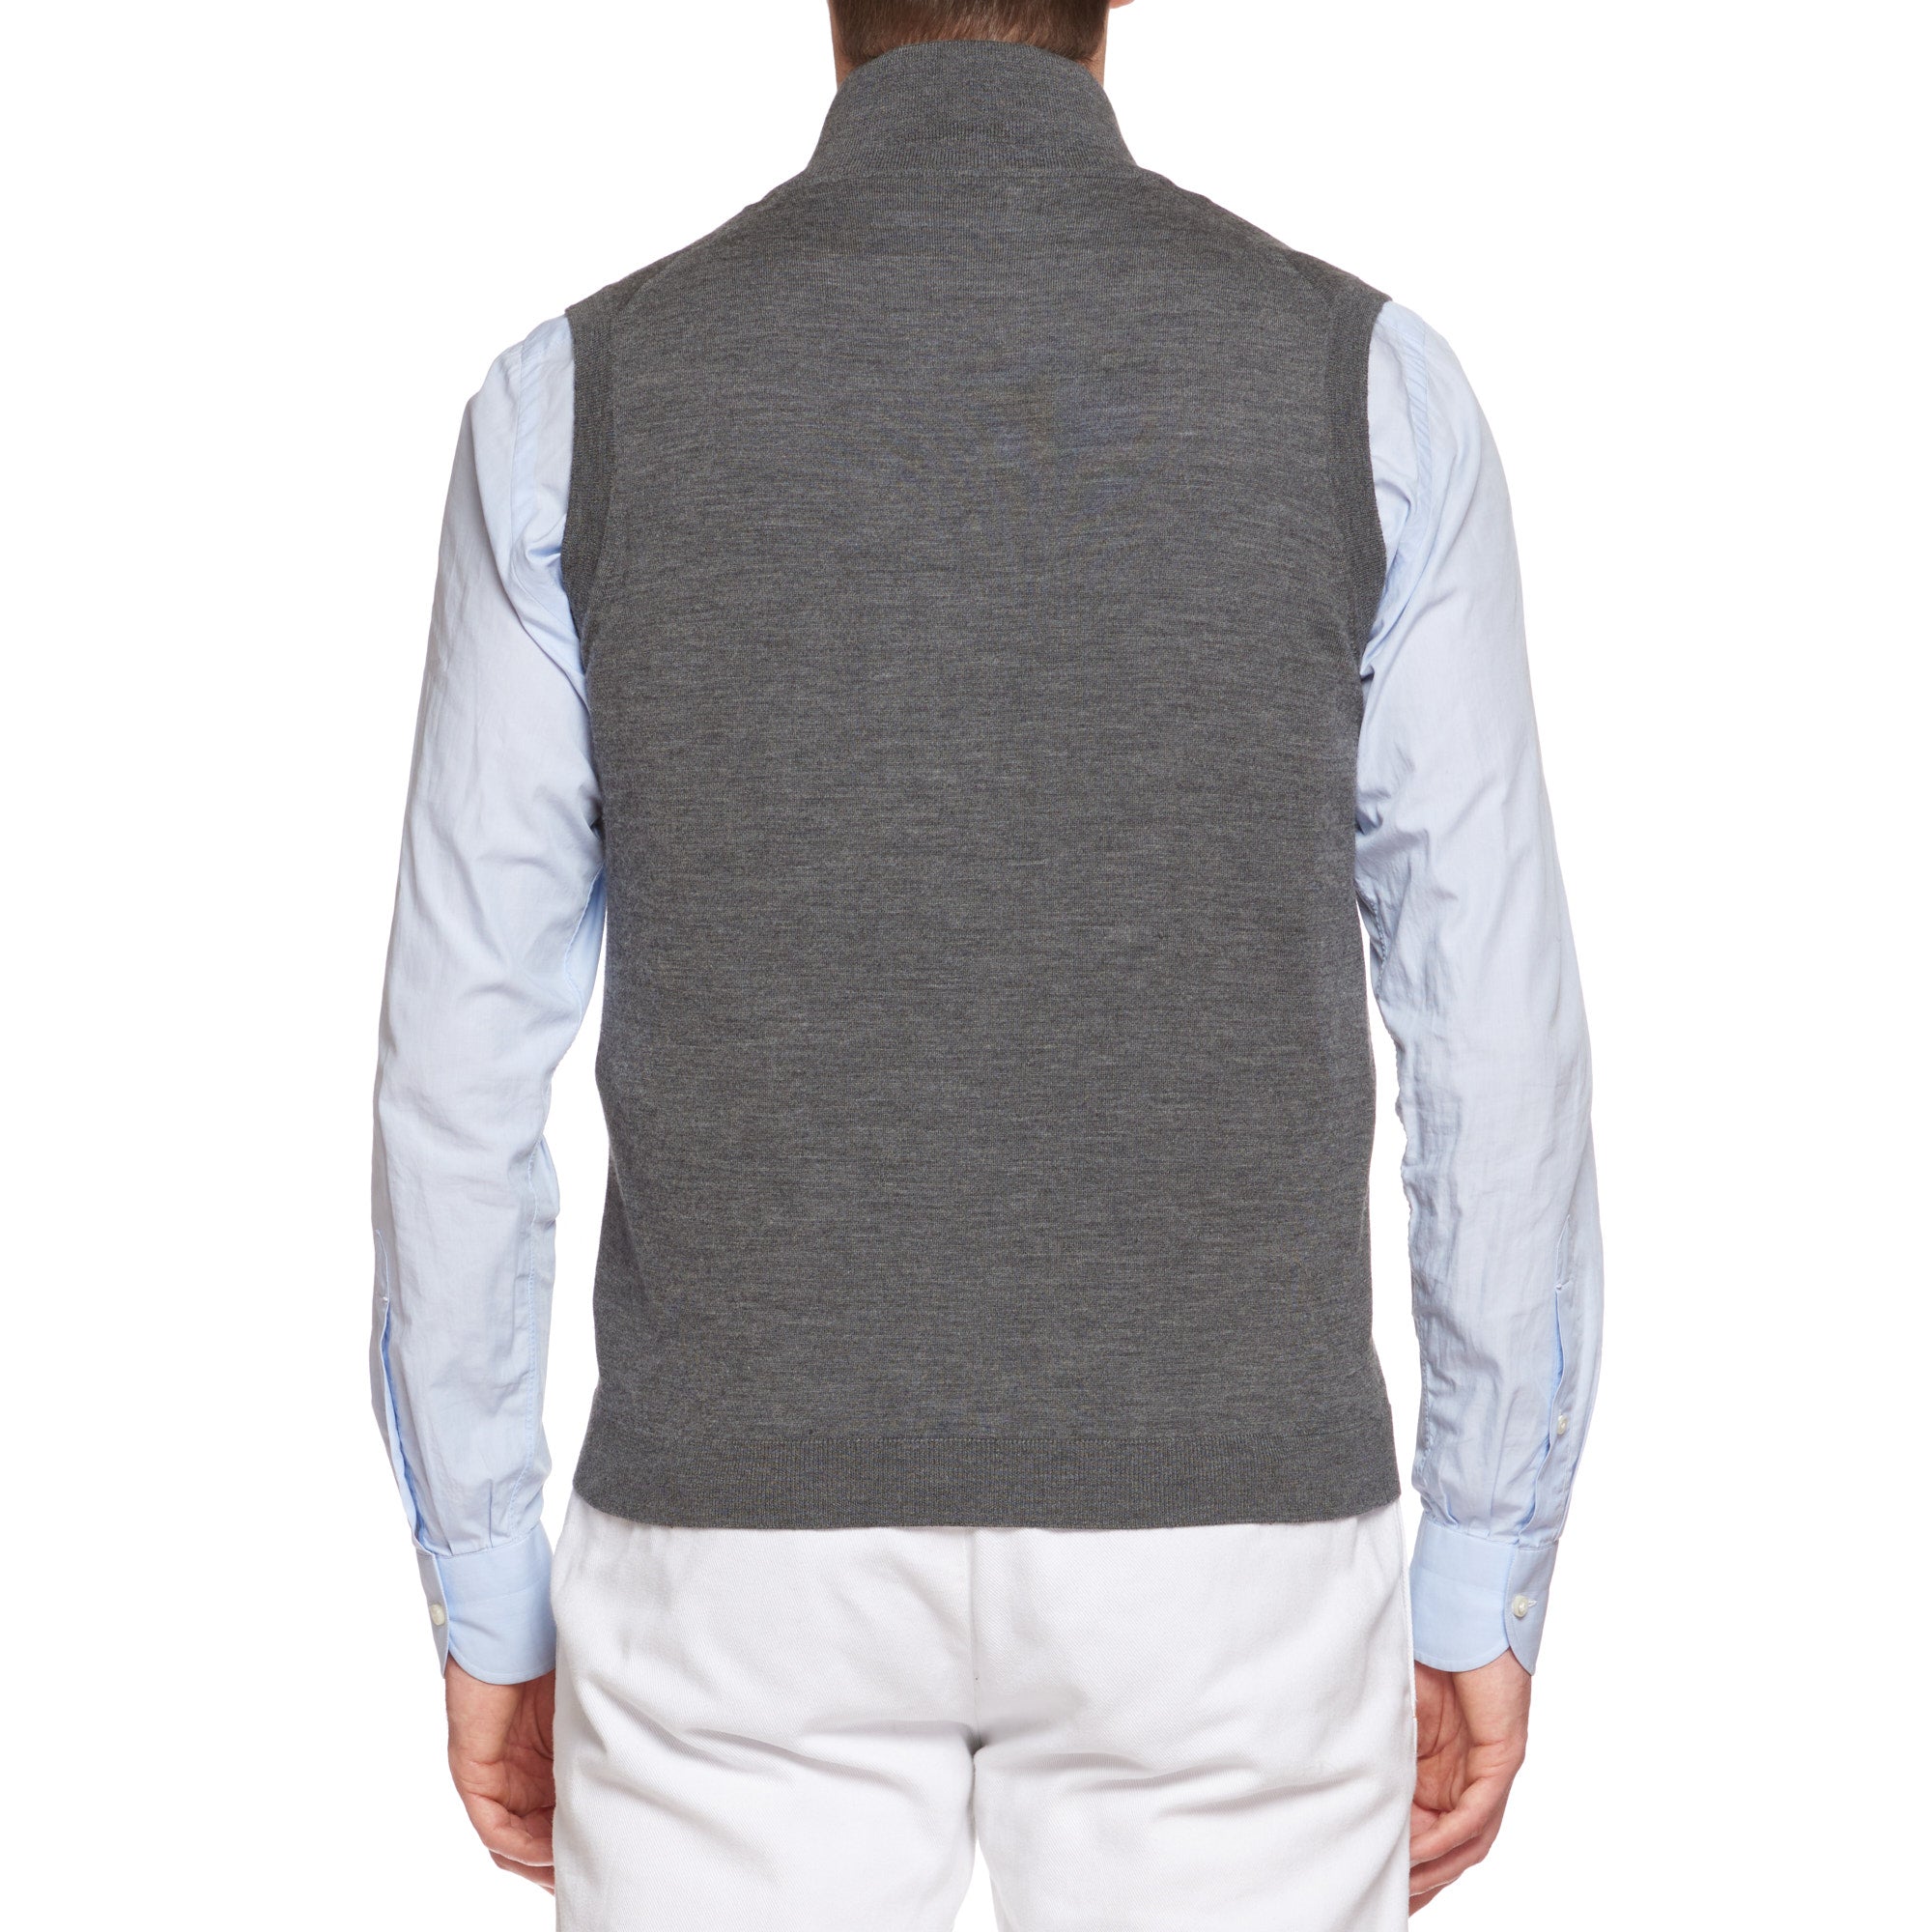 BRUNELLO CUCINELLI Gray Wool-Cashmere Sleeveless Cardigan Sweater Vest 50 US M BRUNELLO CUCINELLI